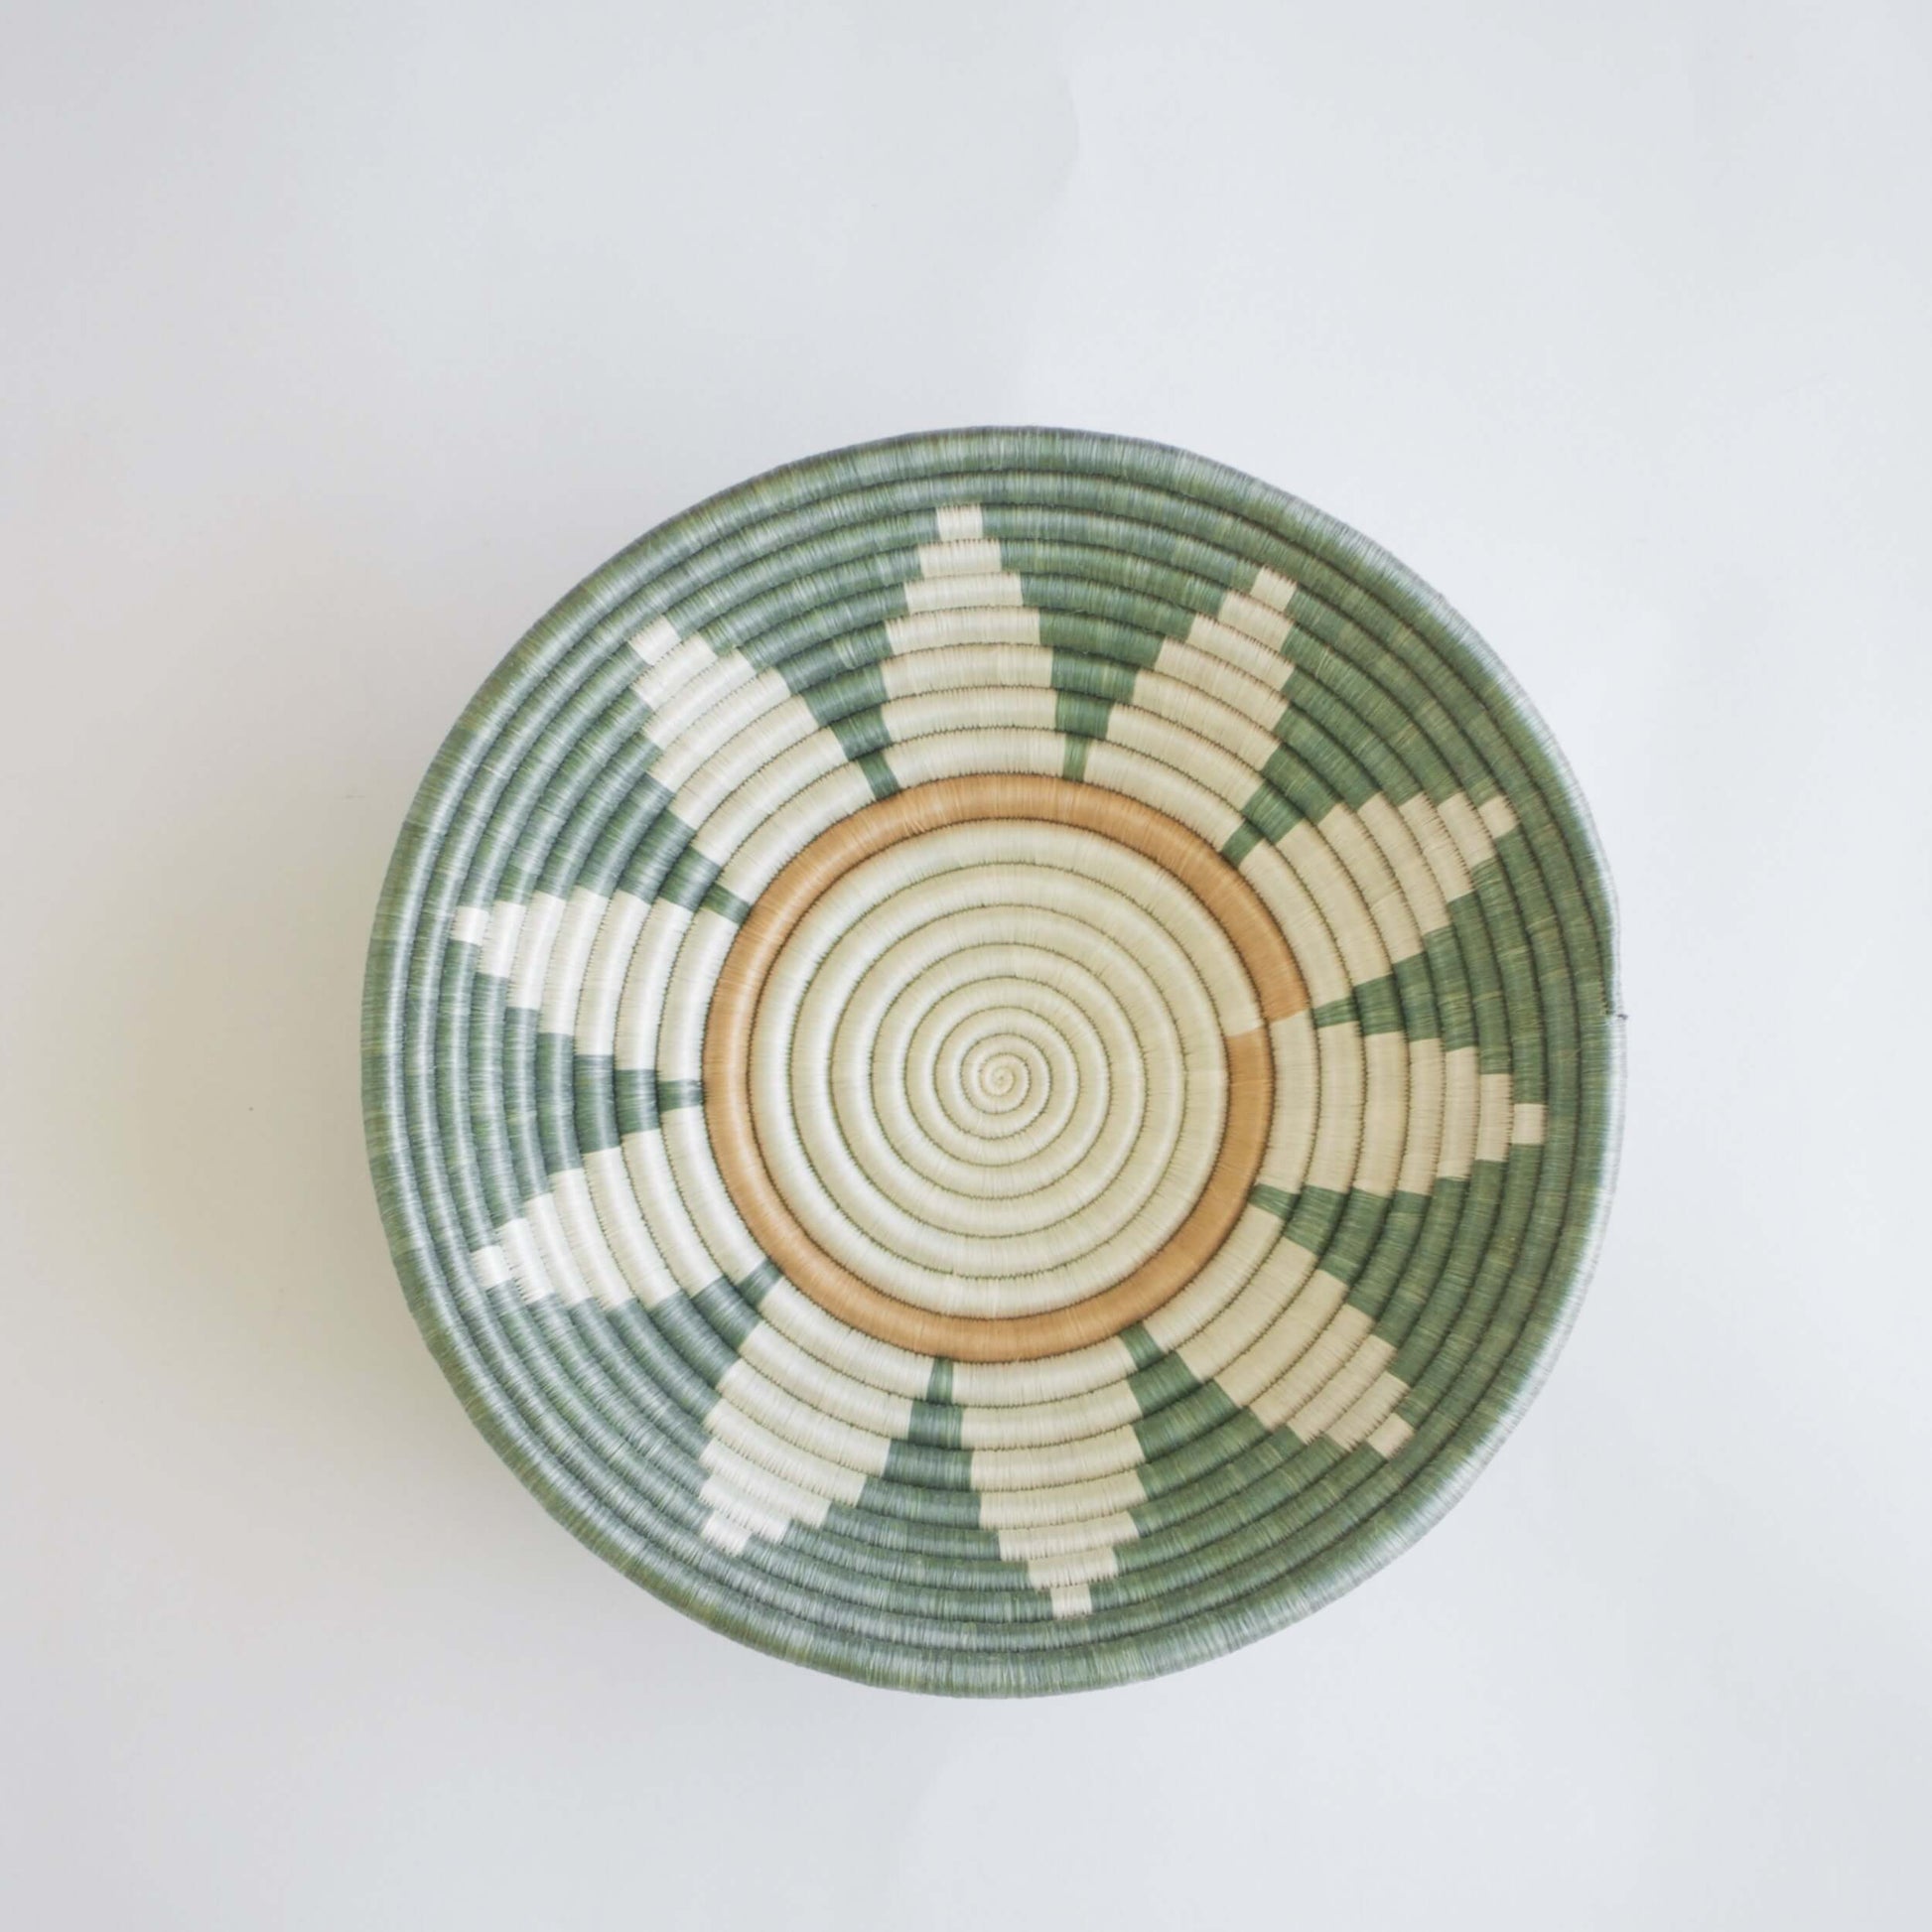 Teal Woven Bowls - Medium | Artisan-made Handwoven Wall Hanging Bowls